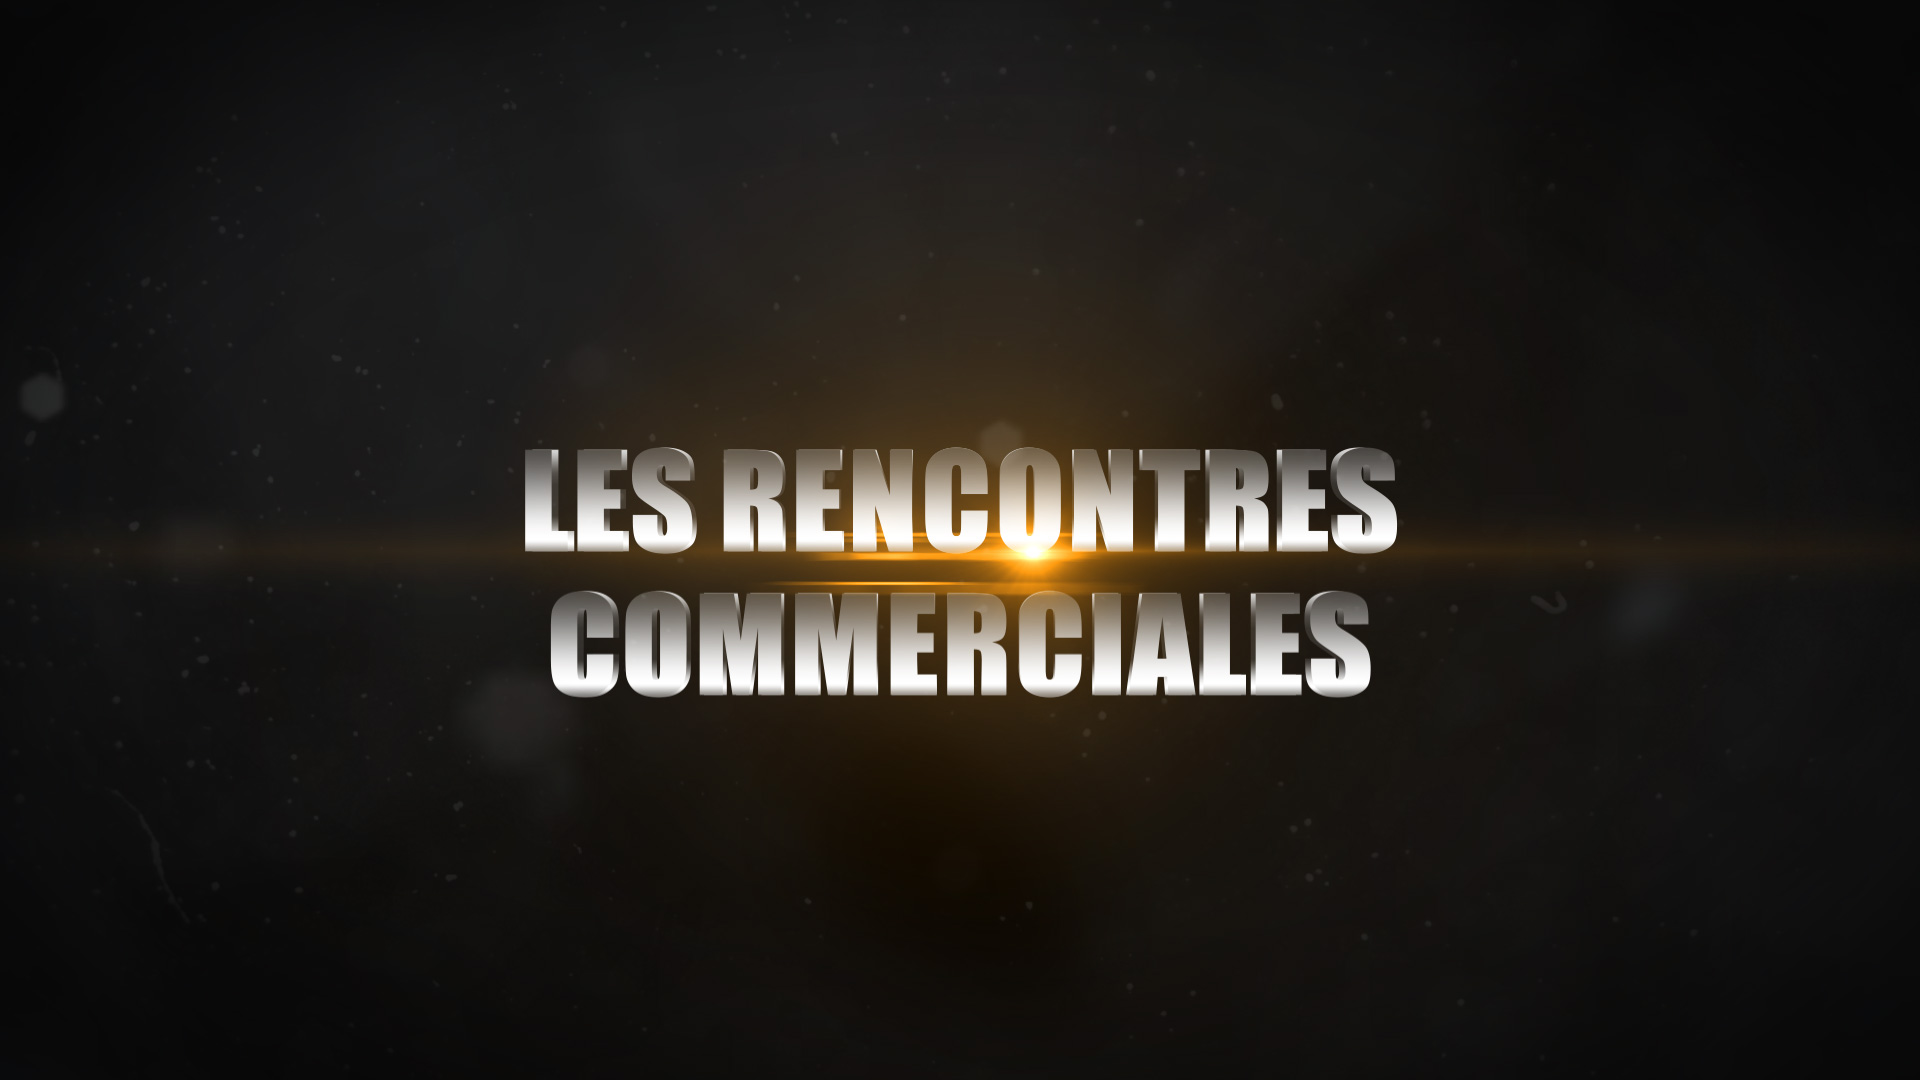 Rencontres Commerciales - 2018 - Marrakech - Teaser